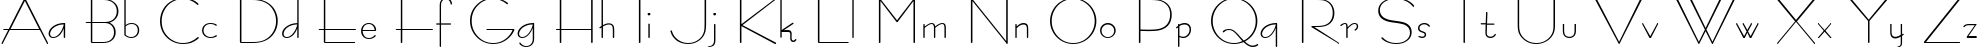 Пример написания английского алфавита шрифтом Konkord-Retro